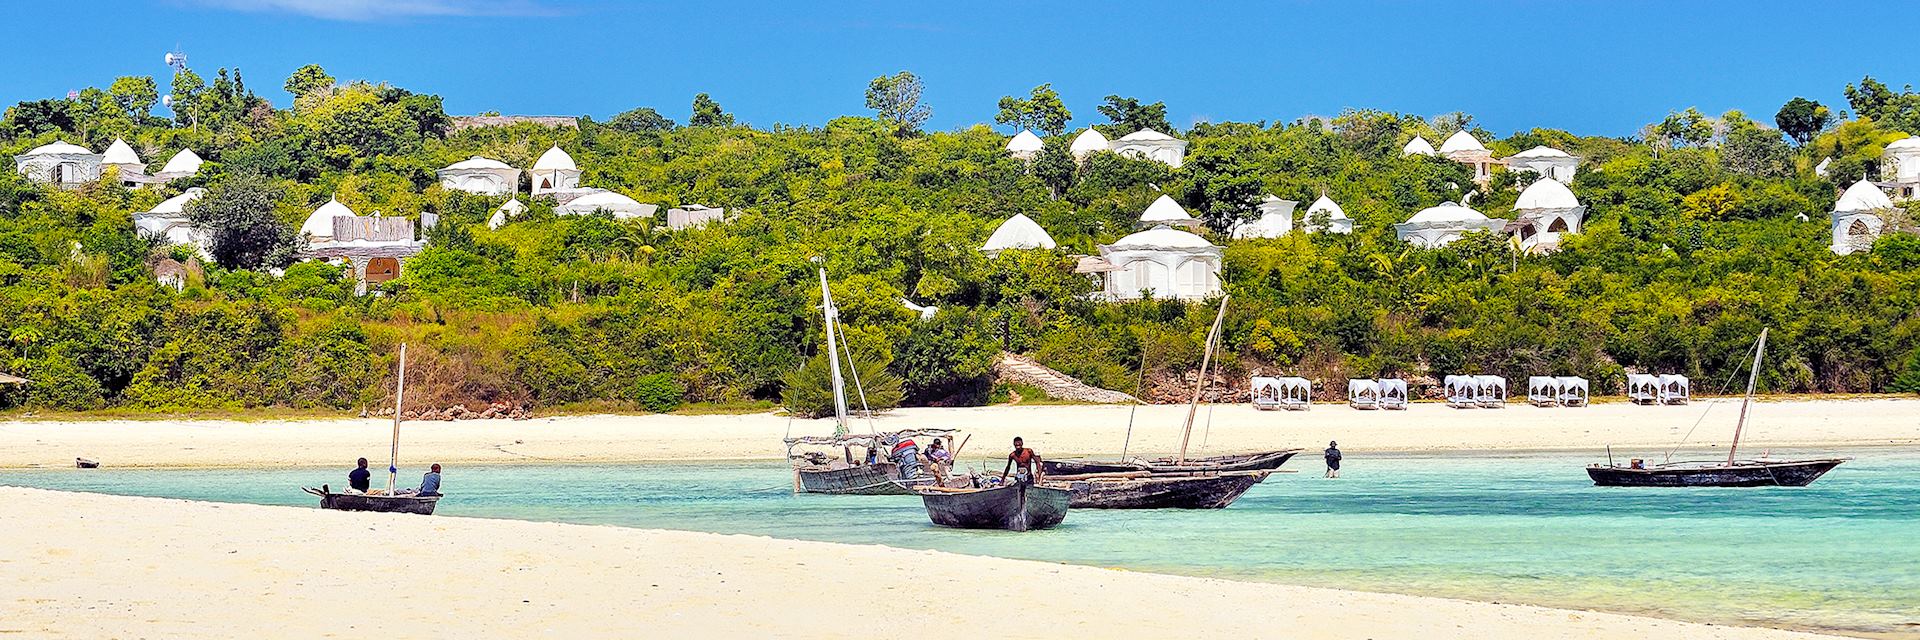 Kilindi, Zanzibar Island